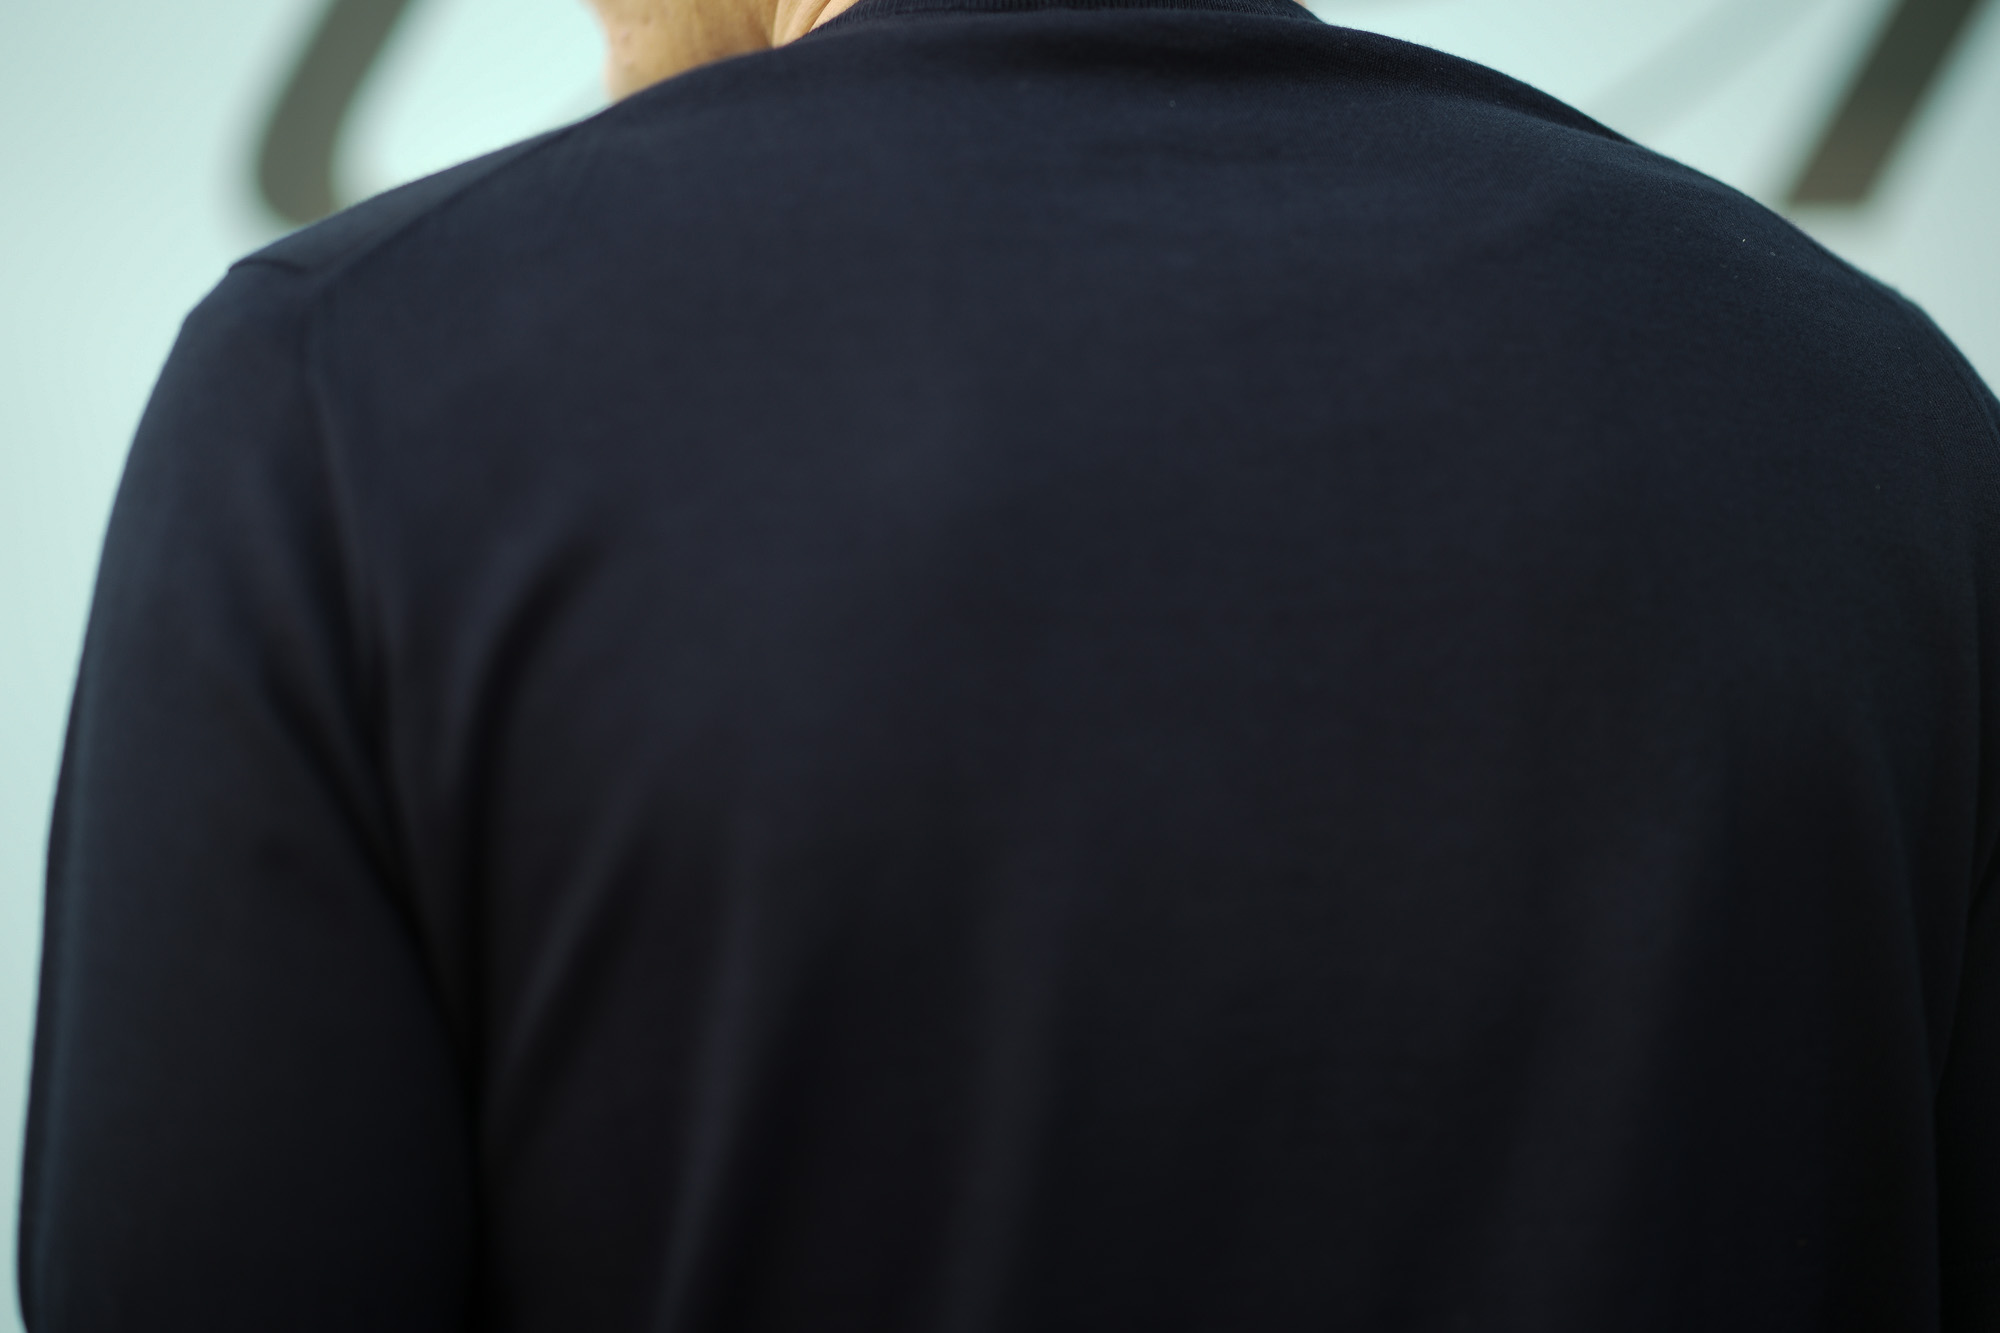  Cruciani(クルチアーニ) 33G Knit T-shirt 33ゲージ コットン ニット Tシャツ NAVY (ネイビー・Z0064)  made in italy (イタリア製) 2020 春夏新作 愛知 名古屋 altoediritto アルトエデリット ニットTEE